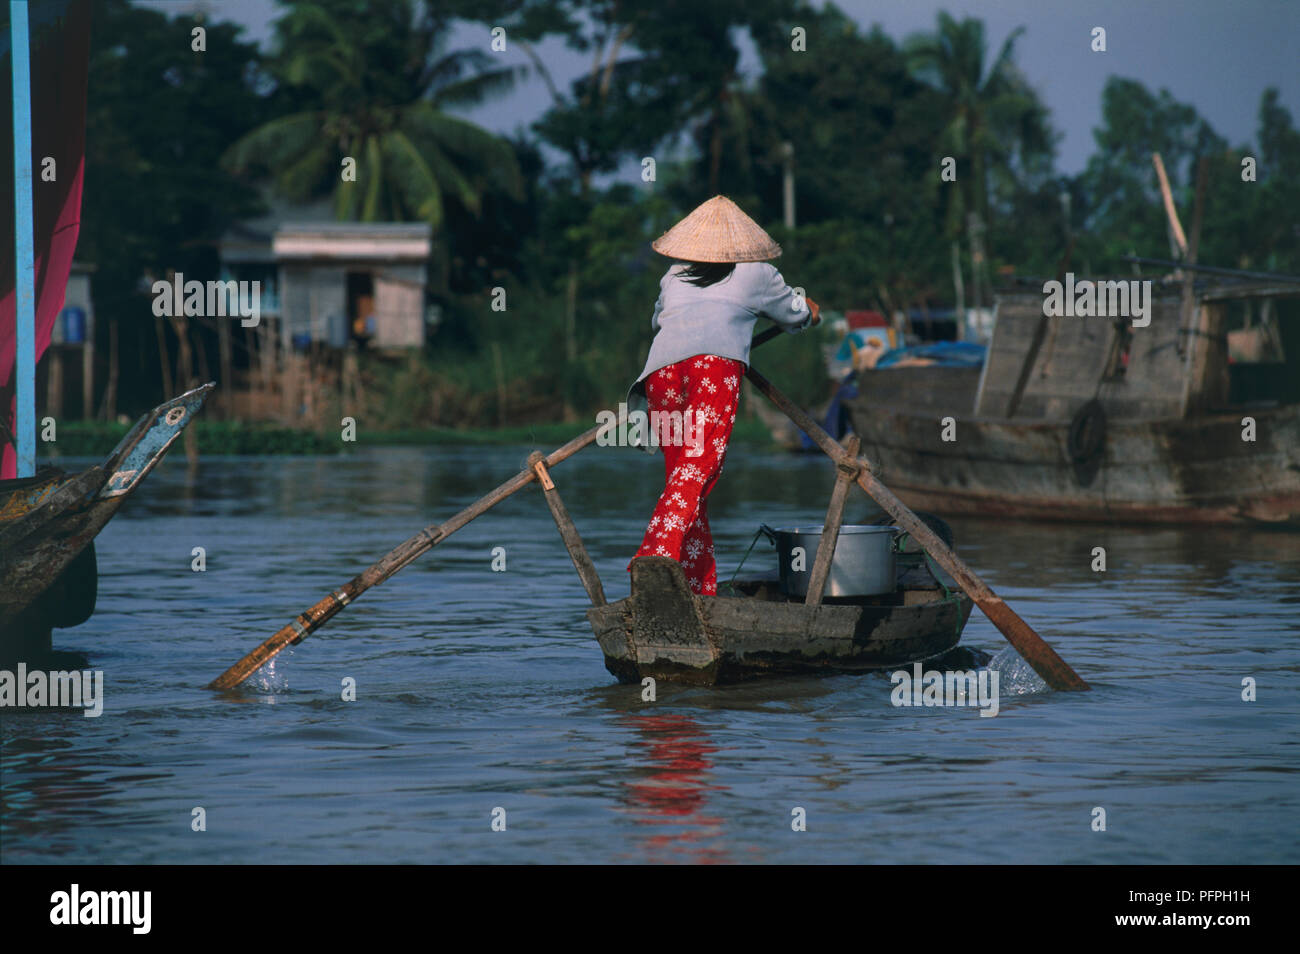 Vietnam, Mekong Delta, woman rowing sampan boat on river with long oars Stock Photo